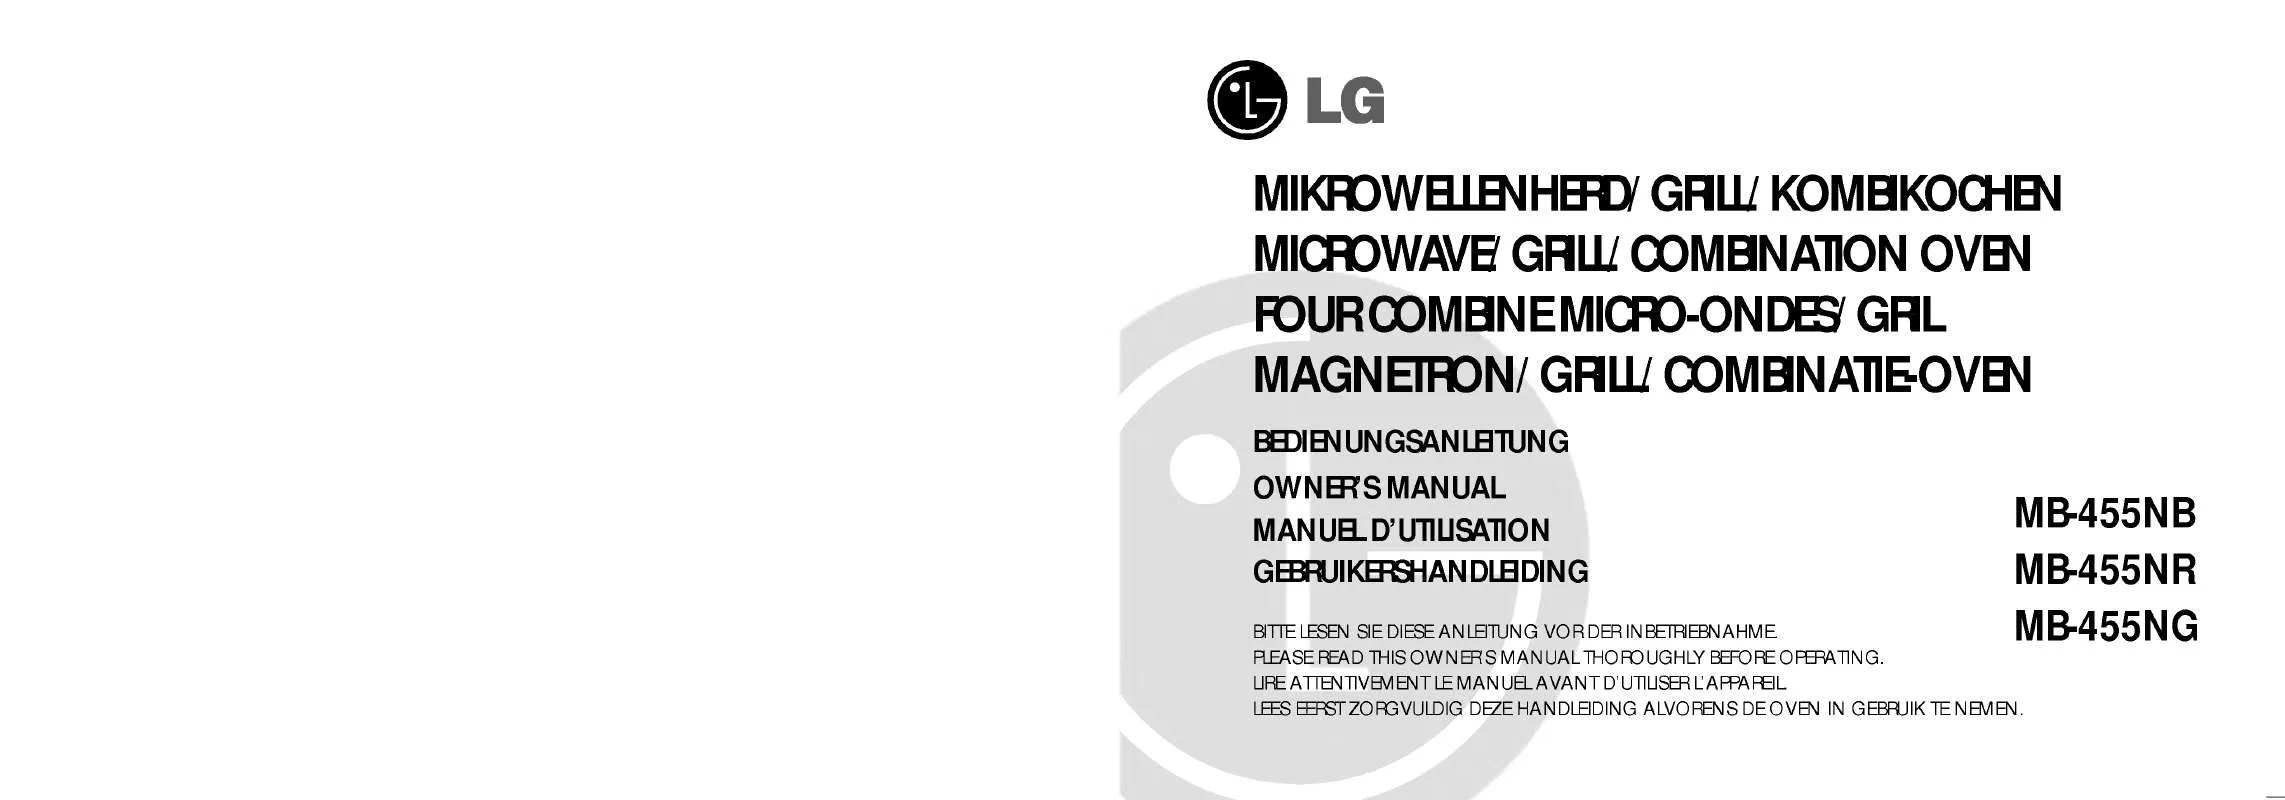 Mode d'emploi LG MB-455NB